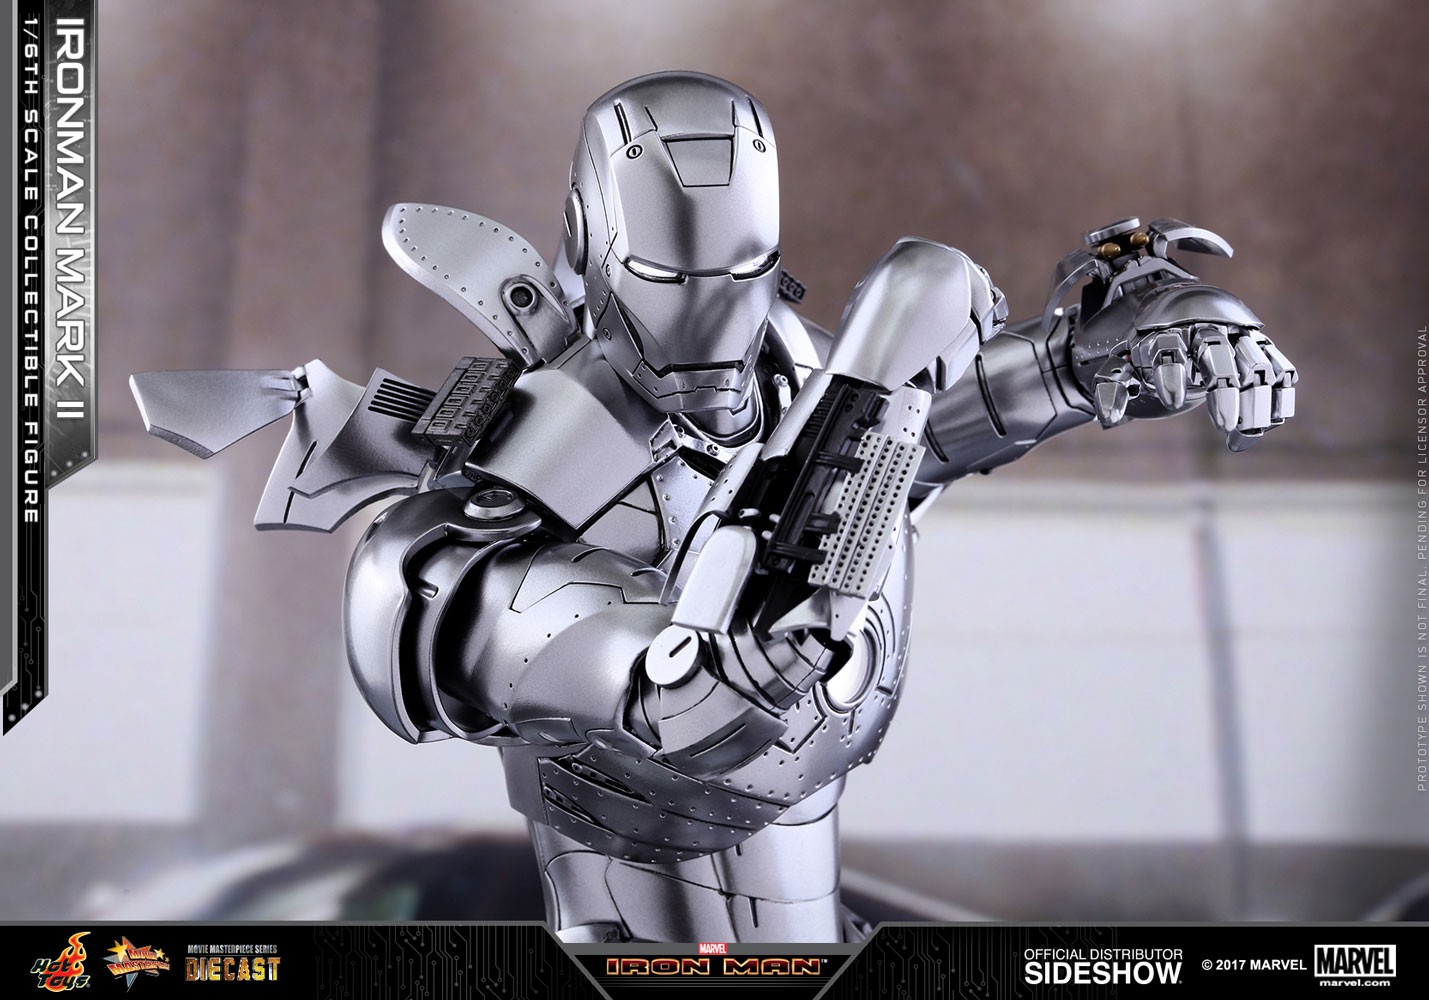 Iron Man Mark II Exclusive Edition (Prototype Shown) View 7